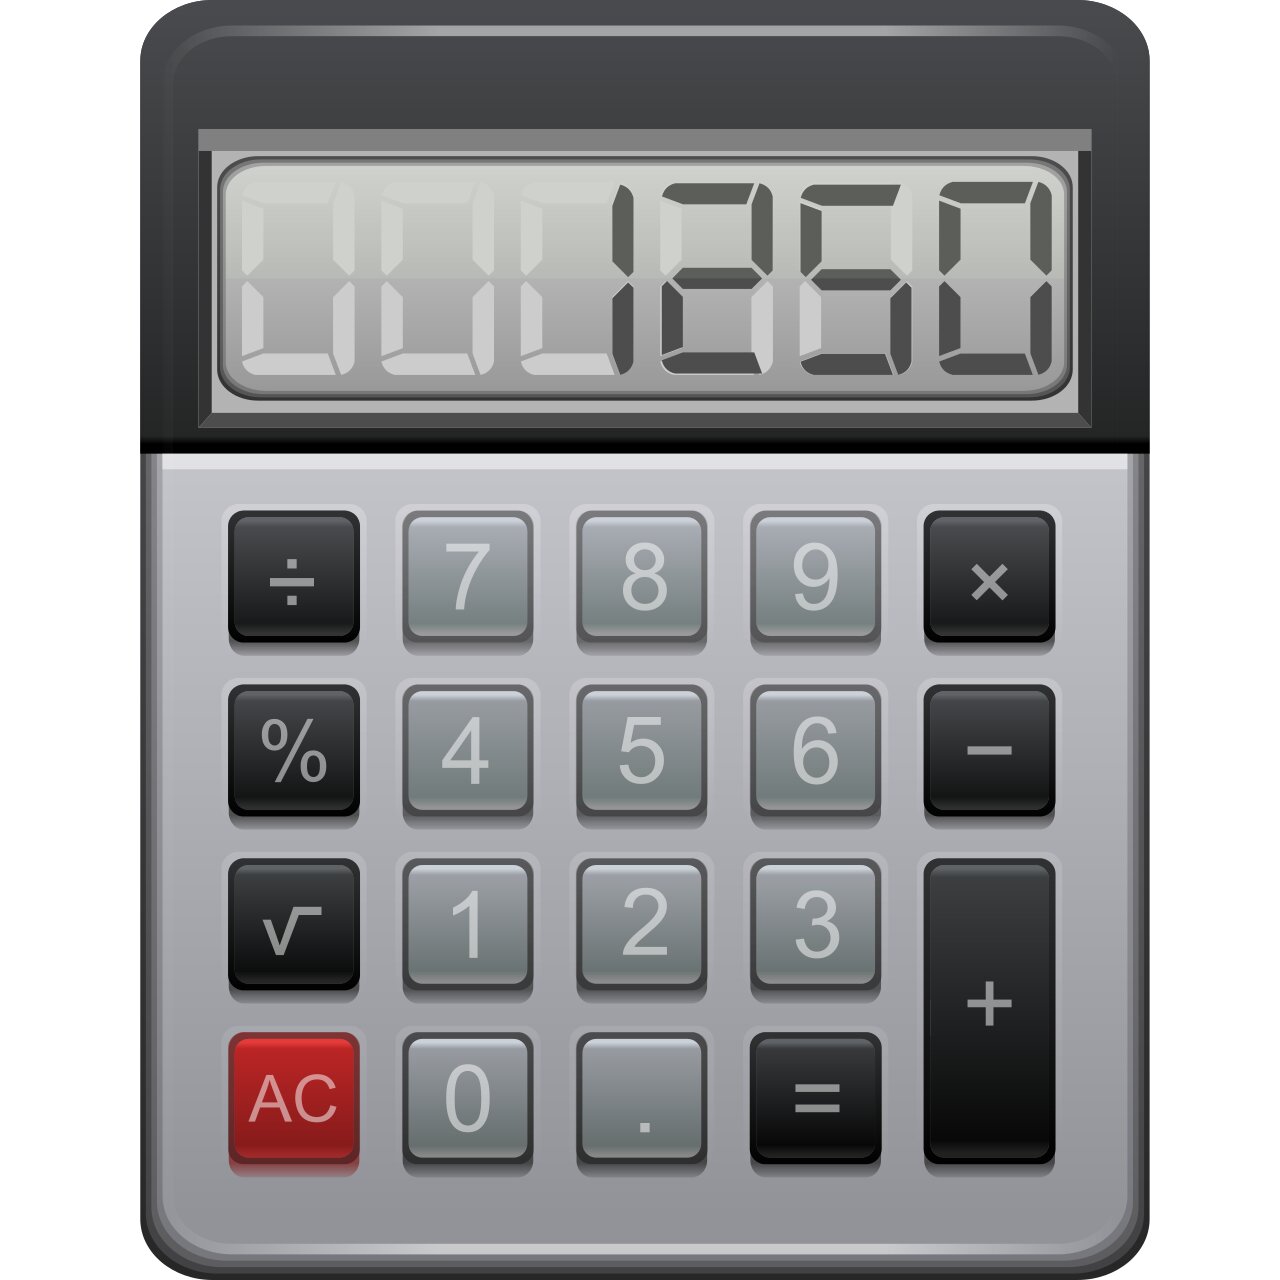 % Change Calculator